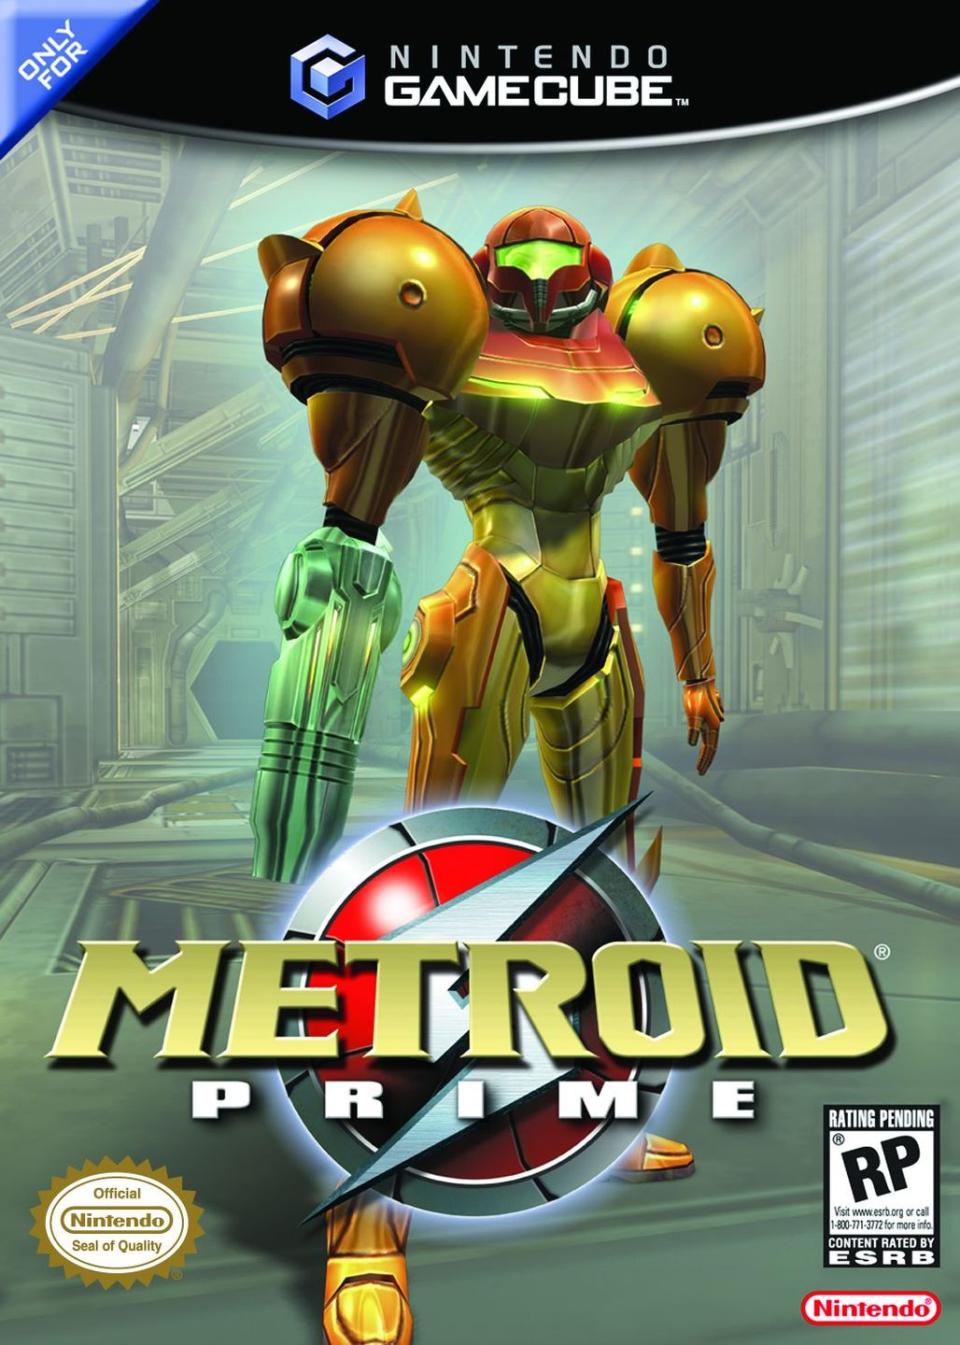 2002: Metroid Prime